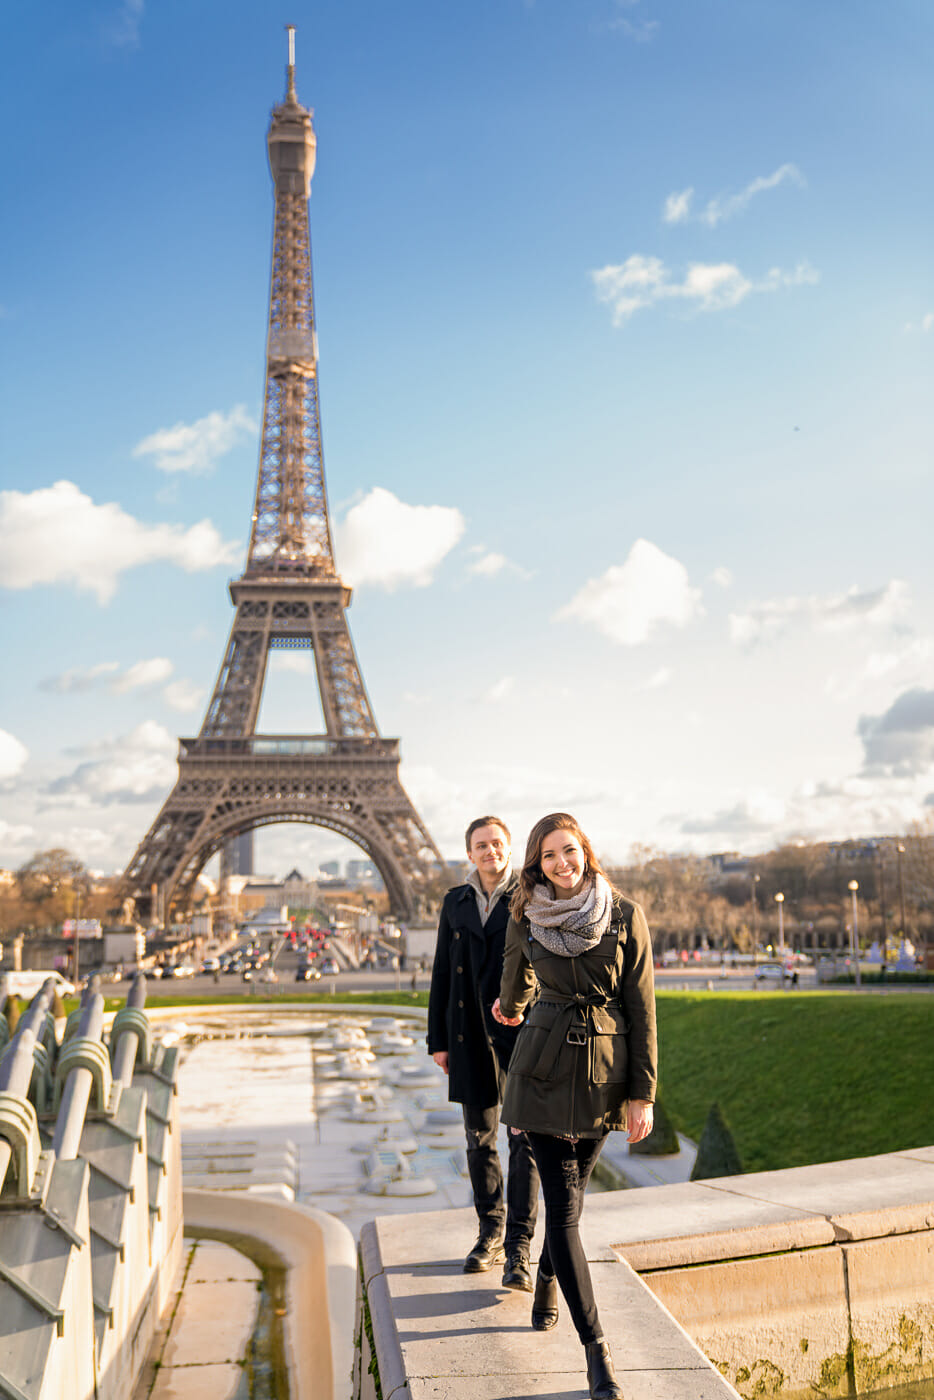 Eiffel Tower Photoshoot at Trocadero Fountains